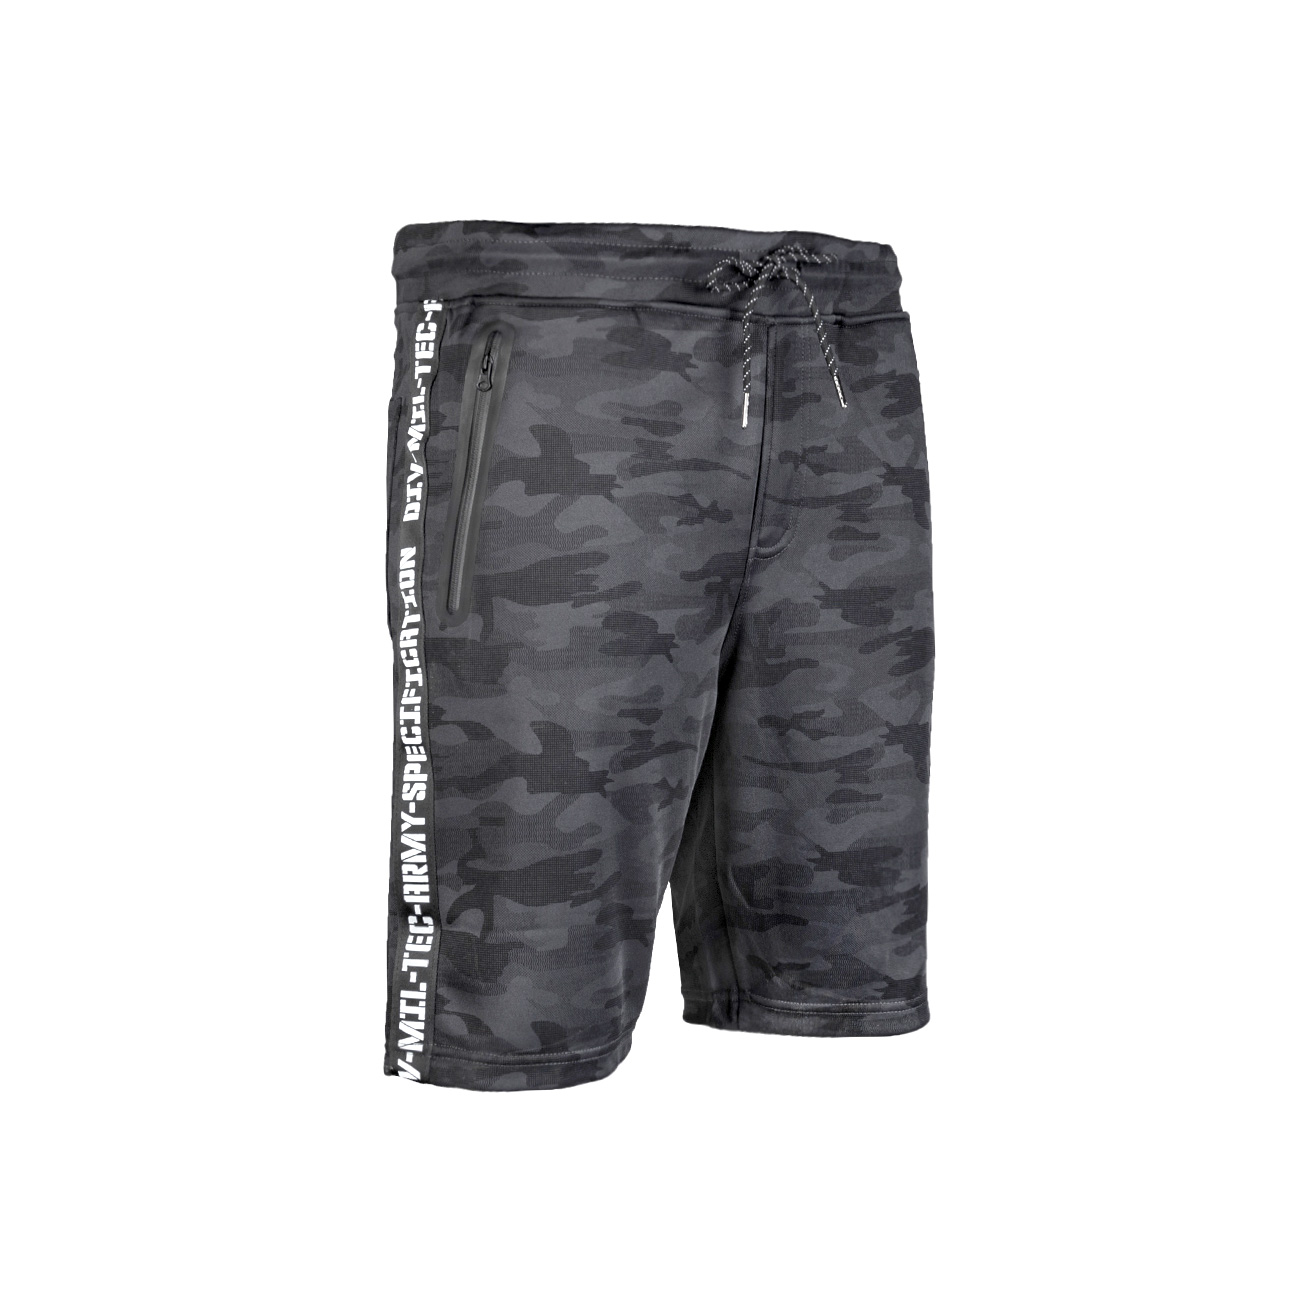 Mil-Tec Shorts Sweat Training Pants dark camo